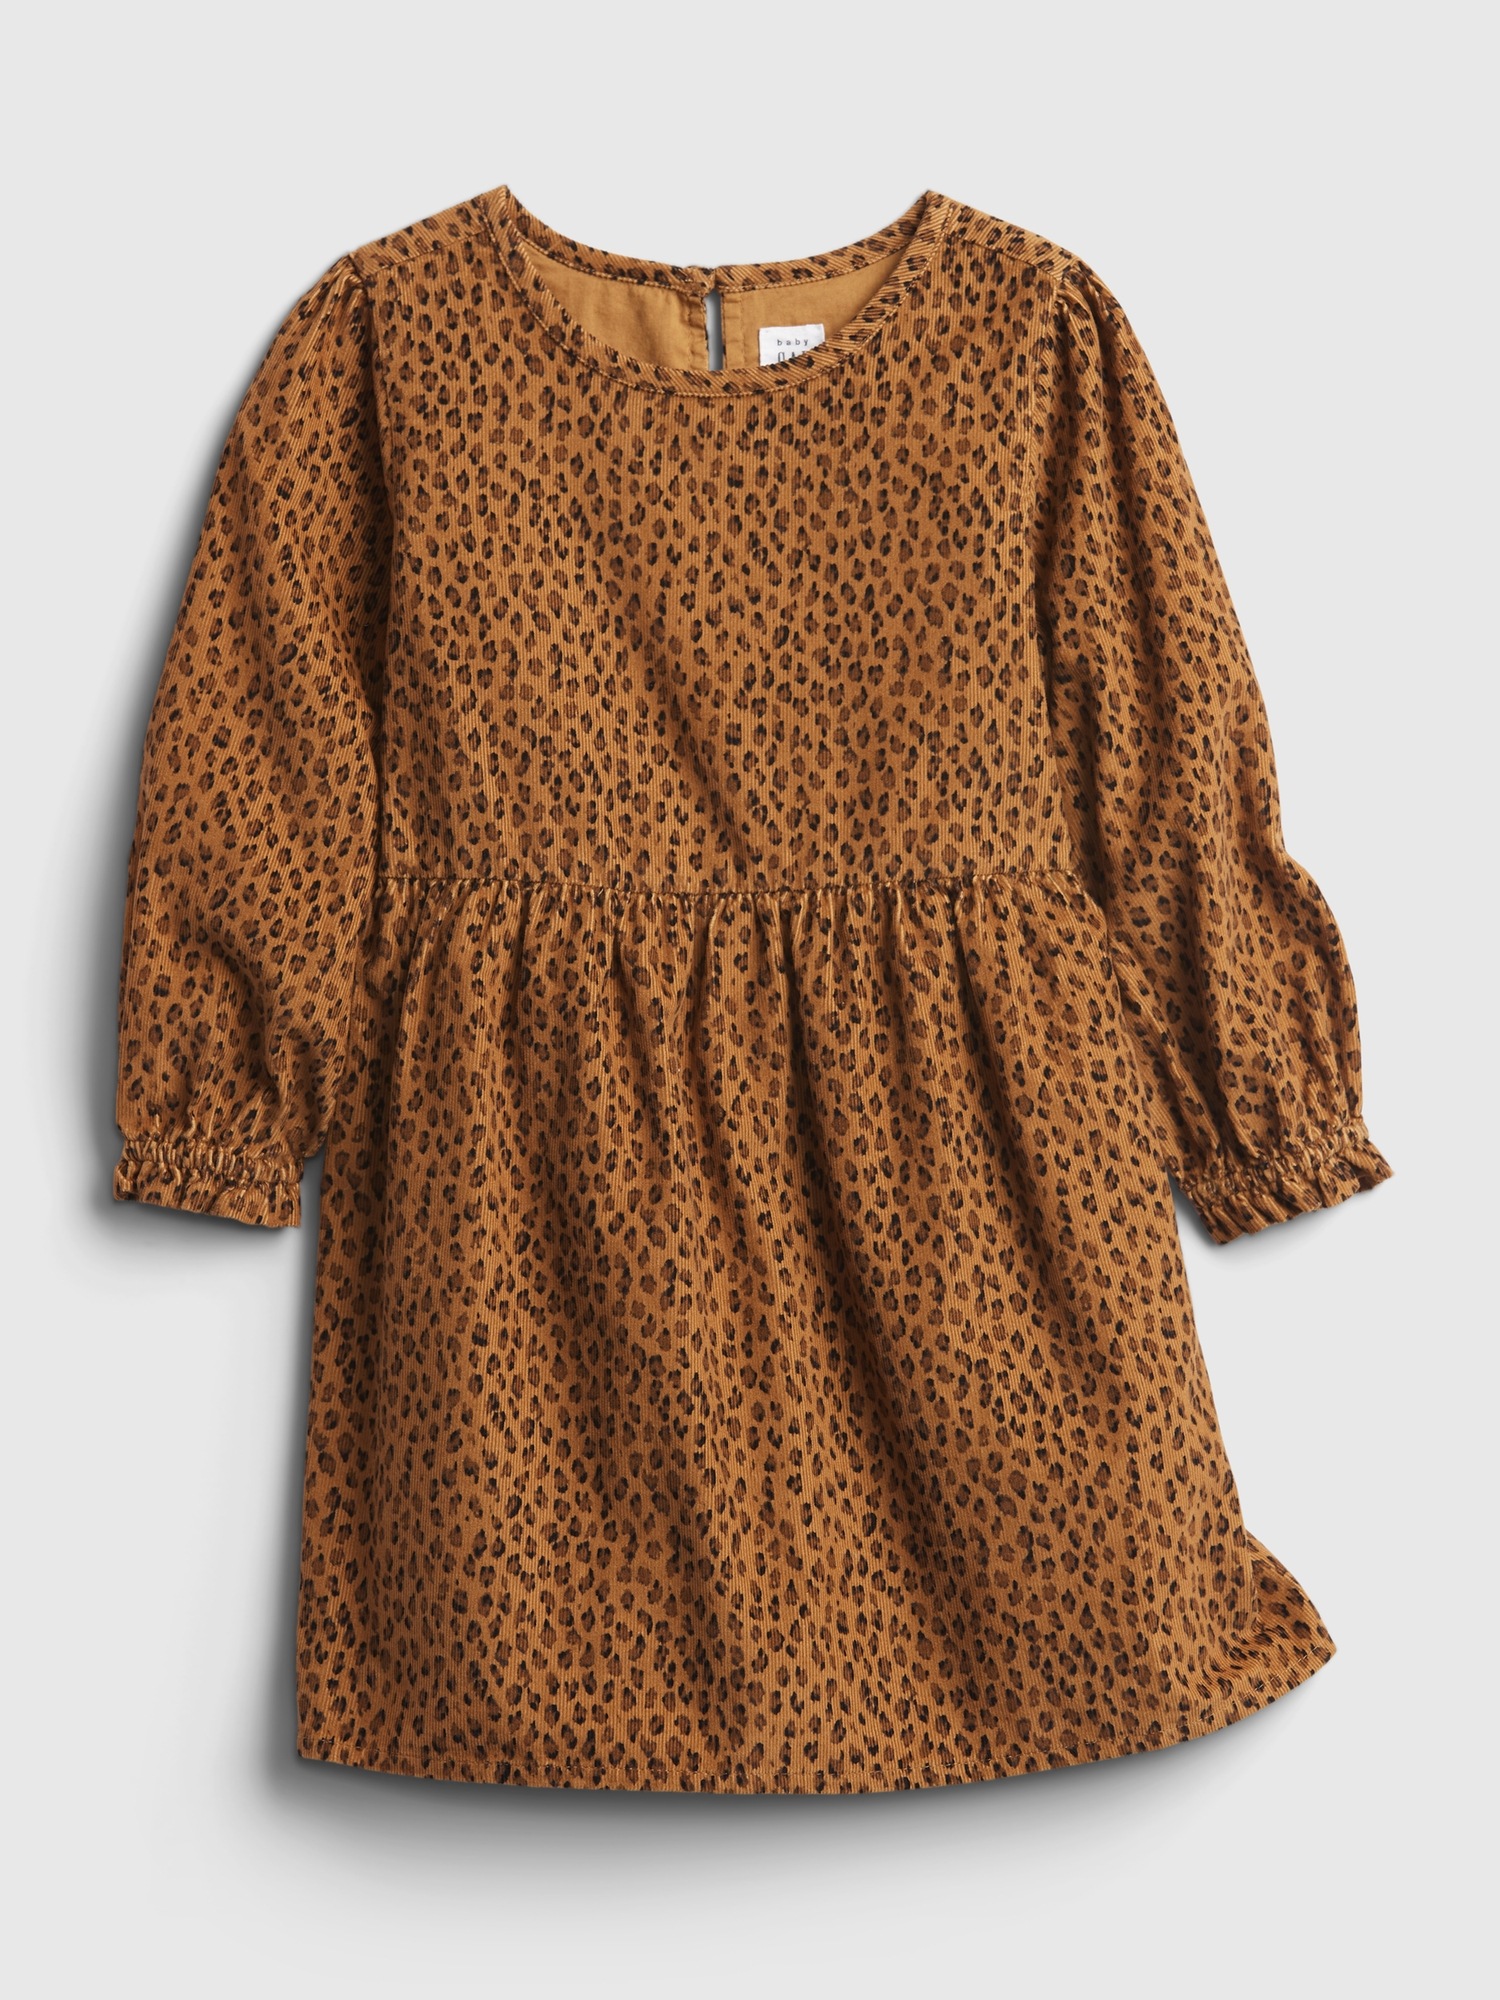 Toddler Corduroy Leopard Dress | Gap